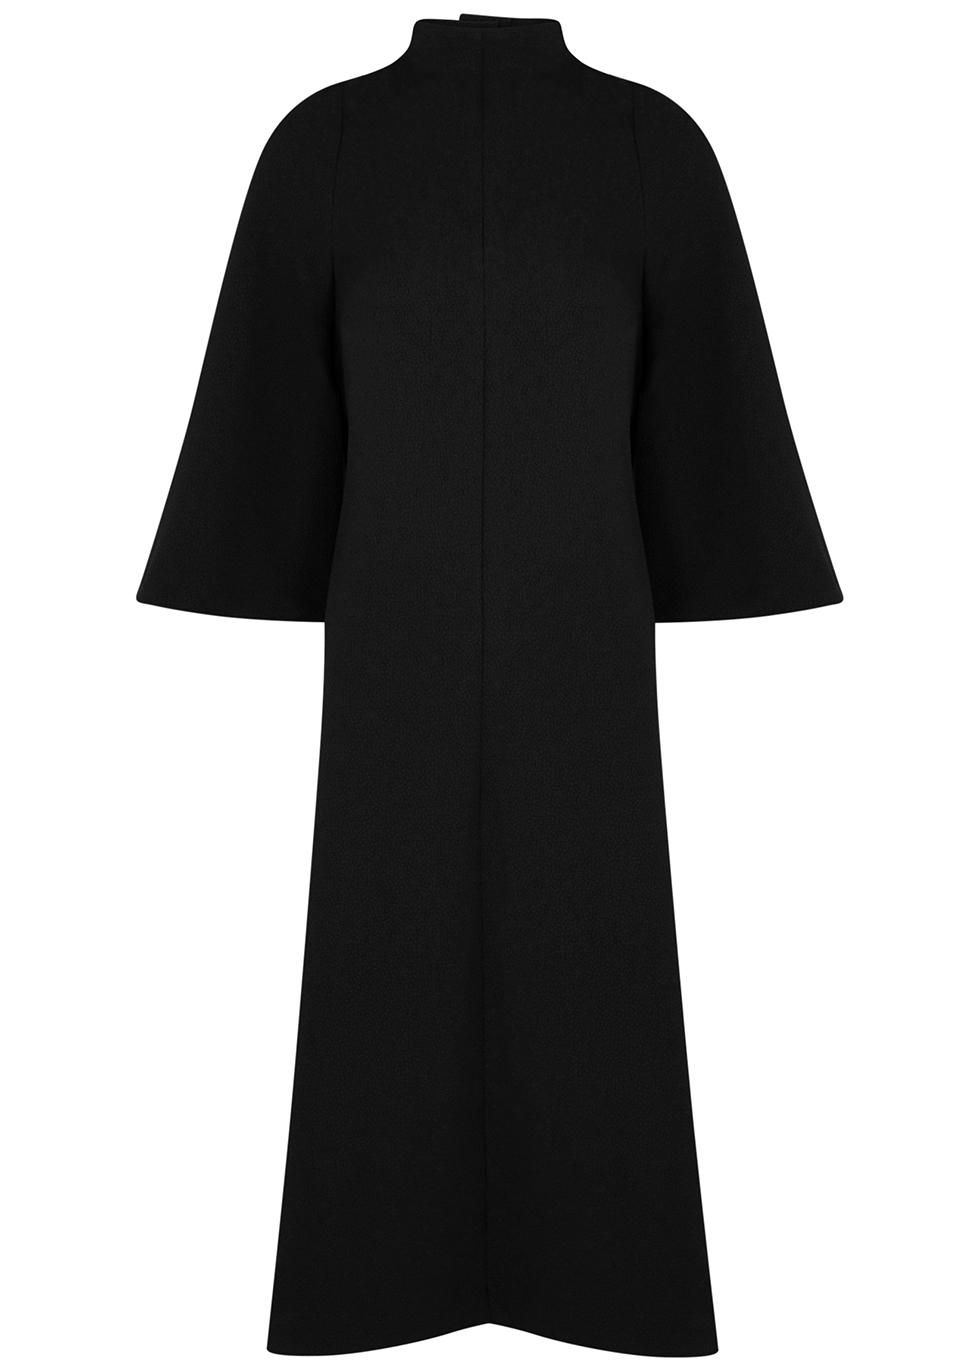 Devon black cut-out midi dress by DAY BIRGER ET MIKKELSEN